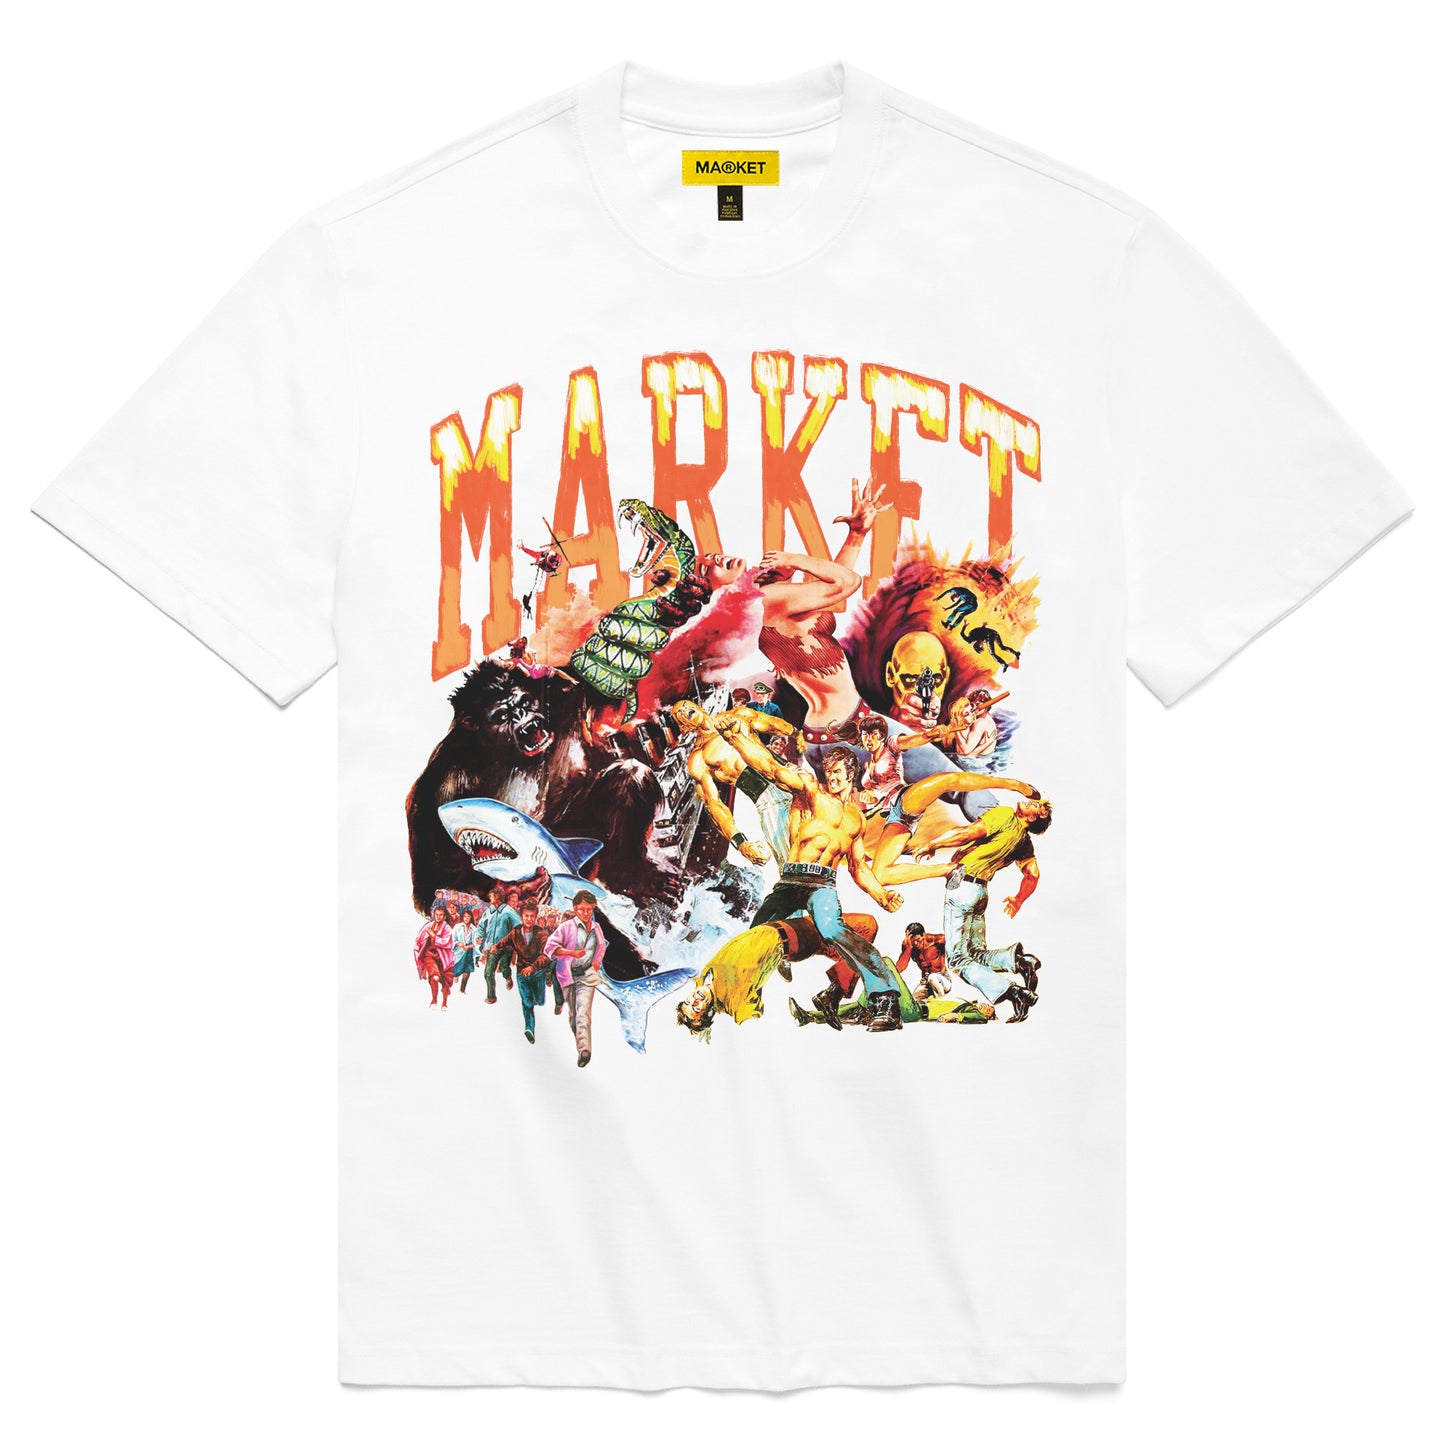 MARKET Arc Animal Mosh Pit T-Shirt